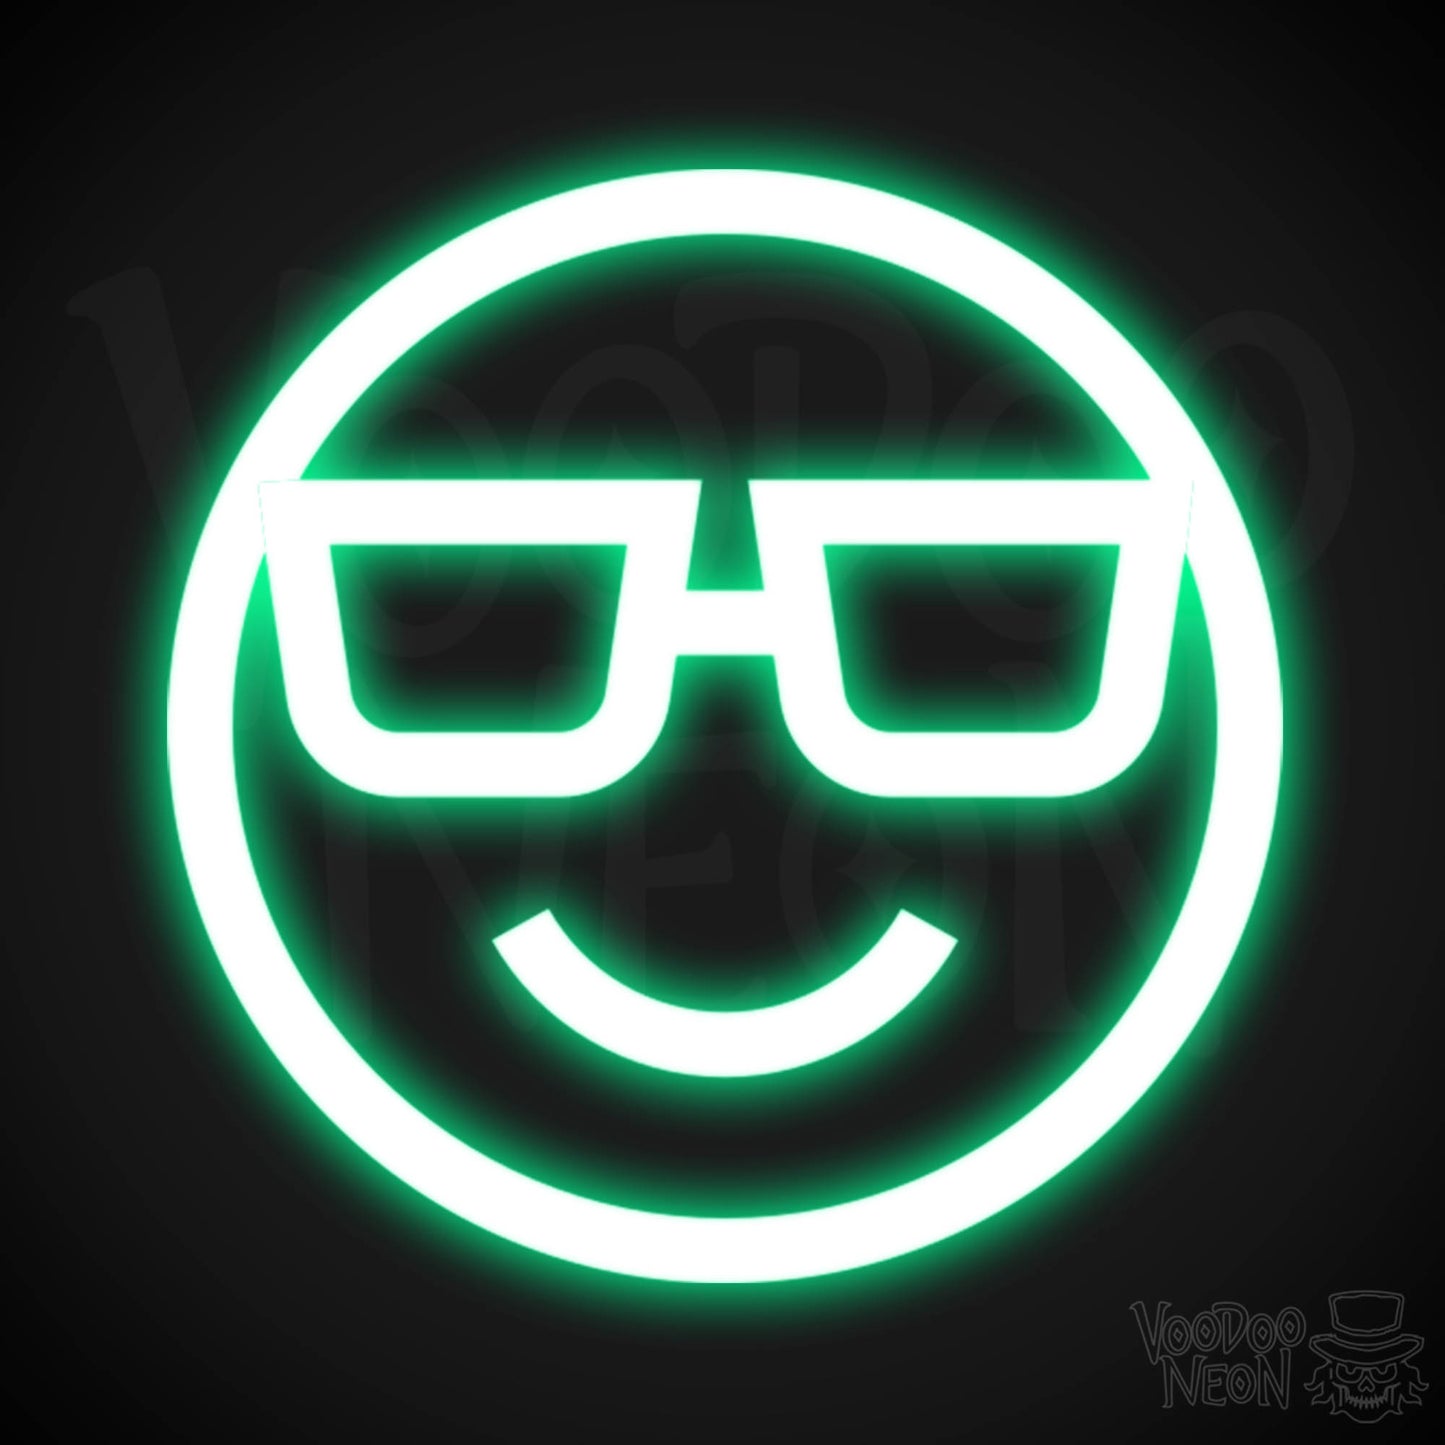 Neon Smiley Face - Smiley Face Neon Sign - LED Wall Art - Color Green